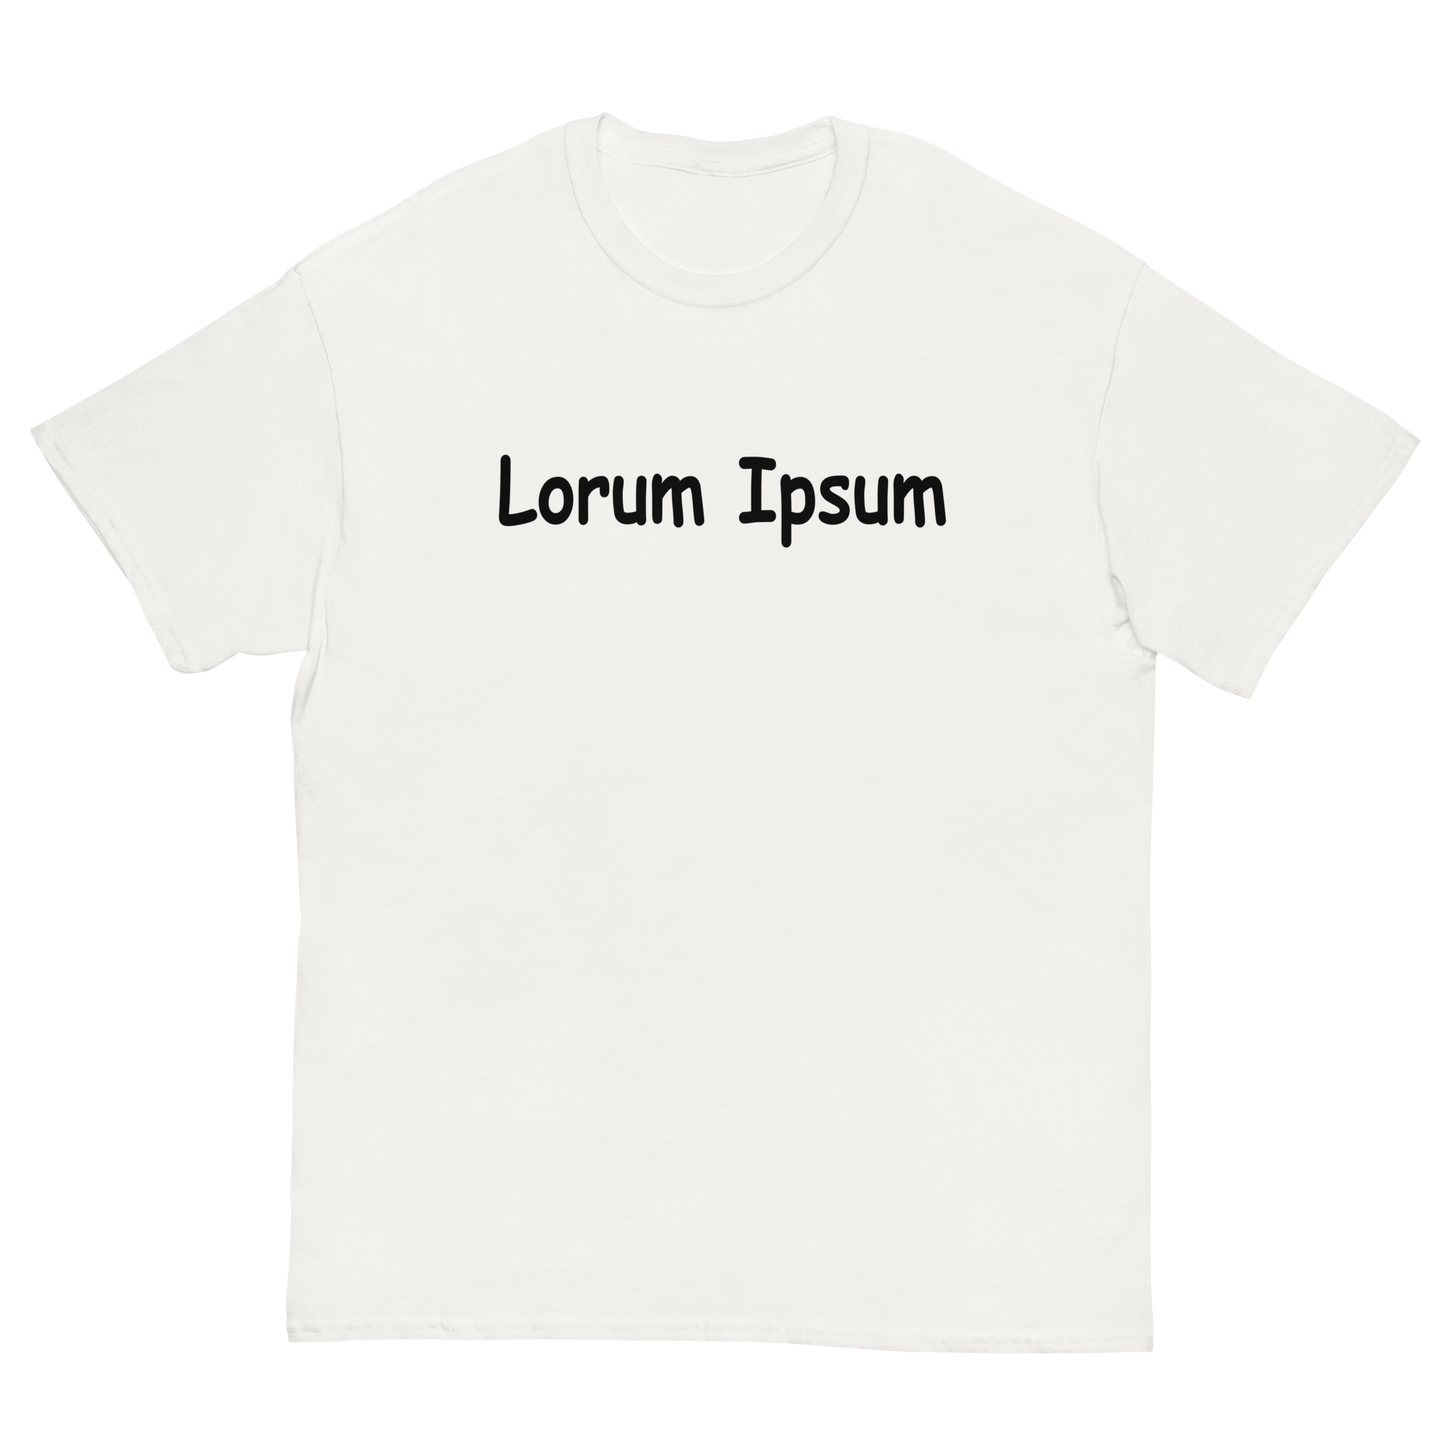 LORUM IPSUM T-SHIRT